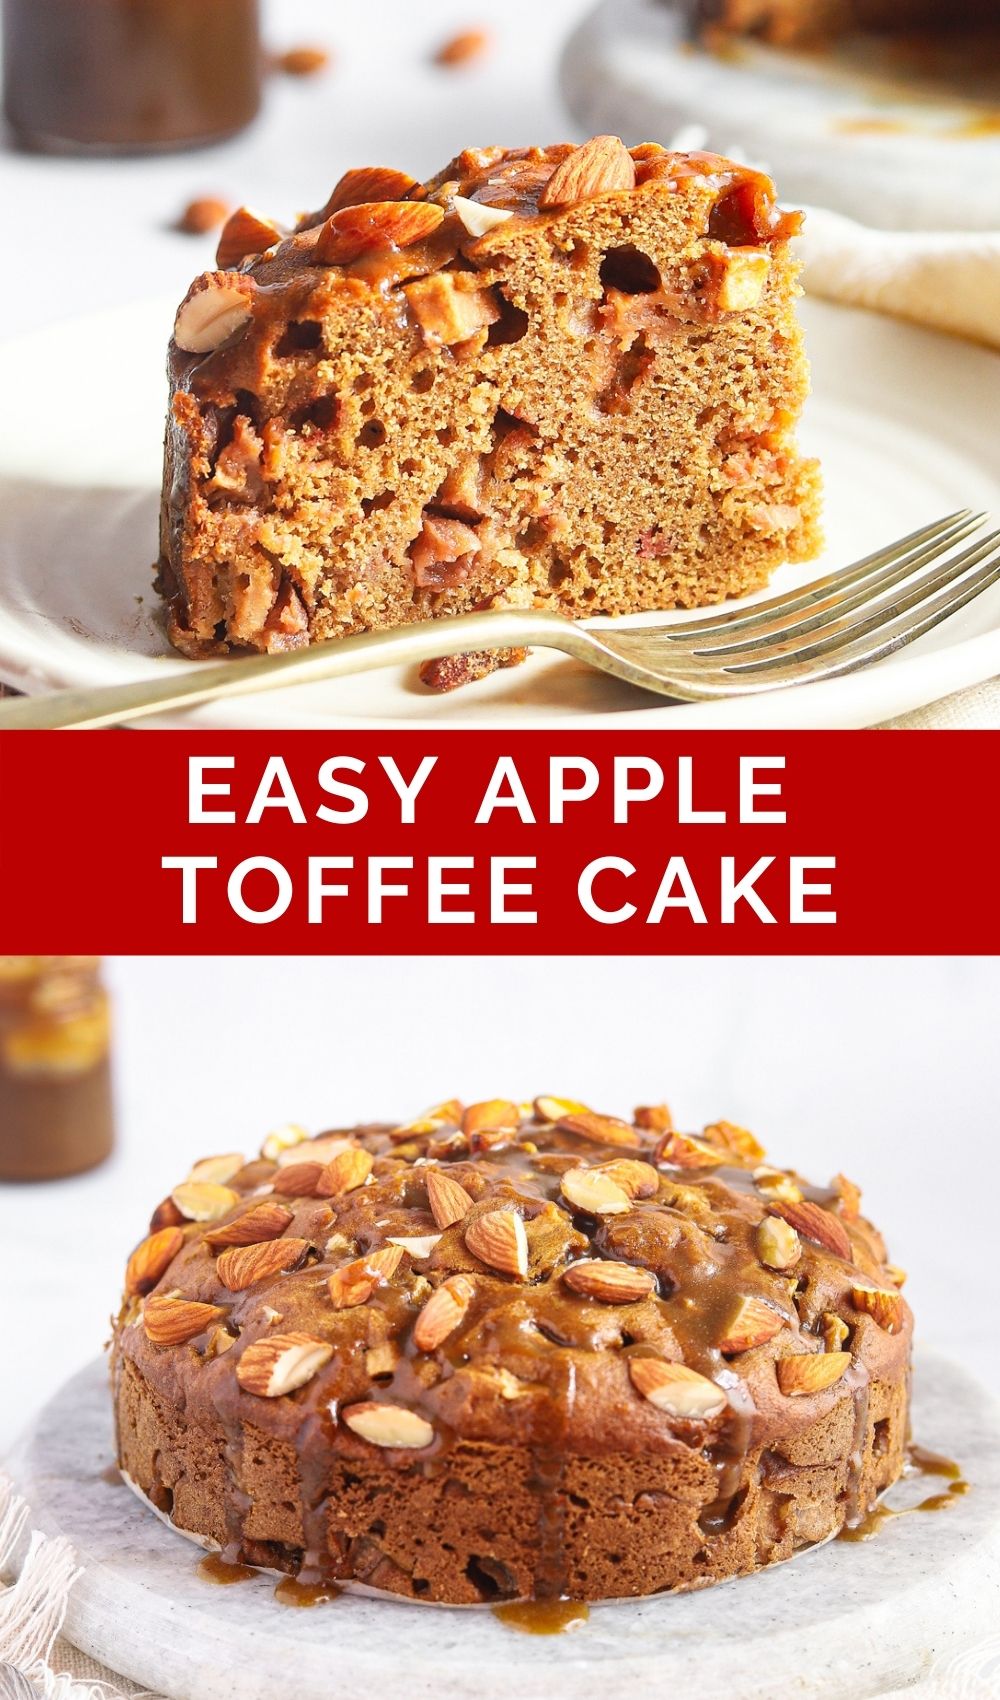 pinnaple image of easy apple toffee cake